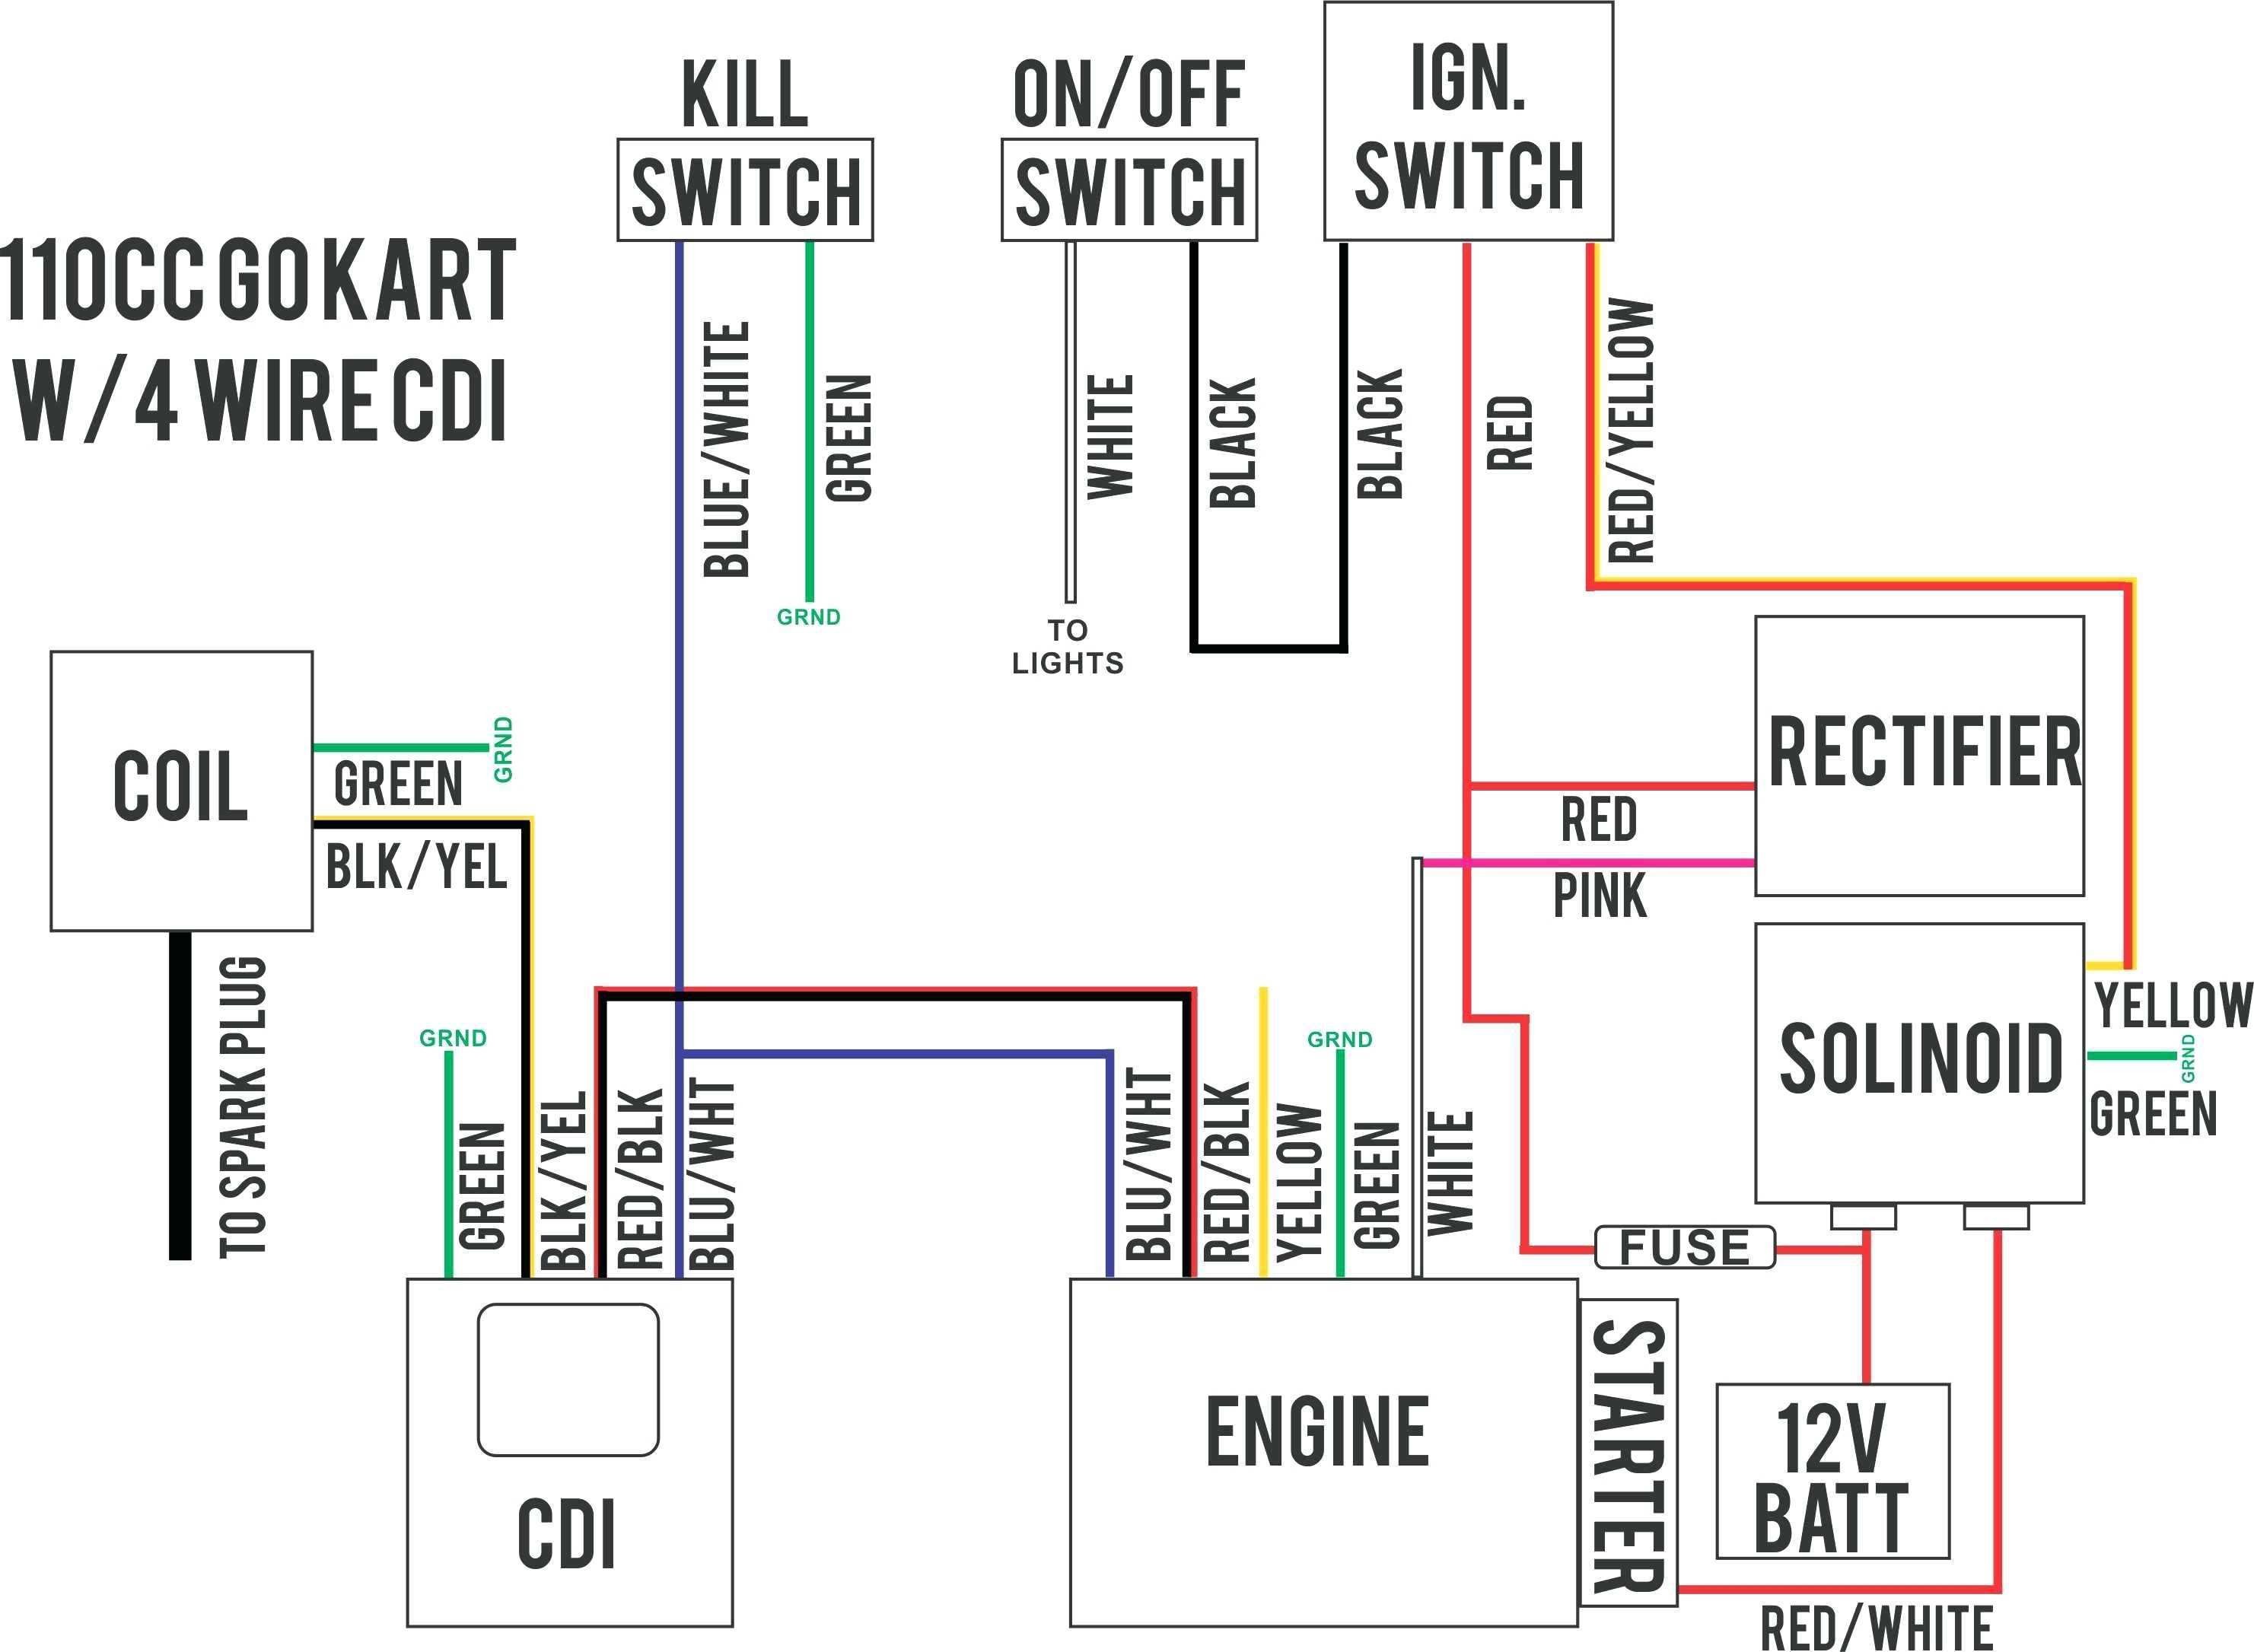 wiring a garbage disposal switch free wiring diagrams rh javastraat co